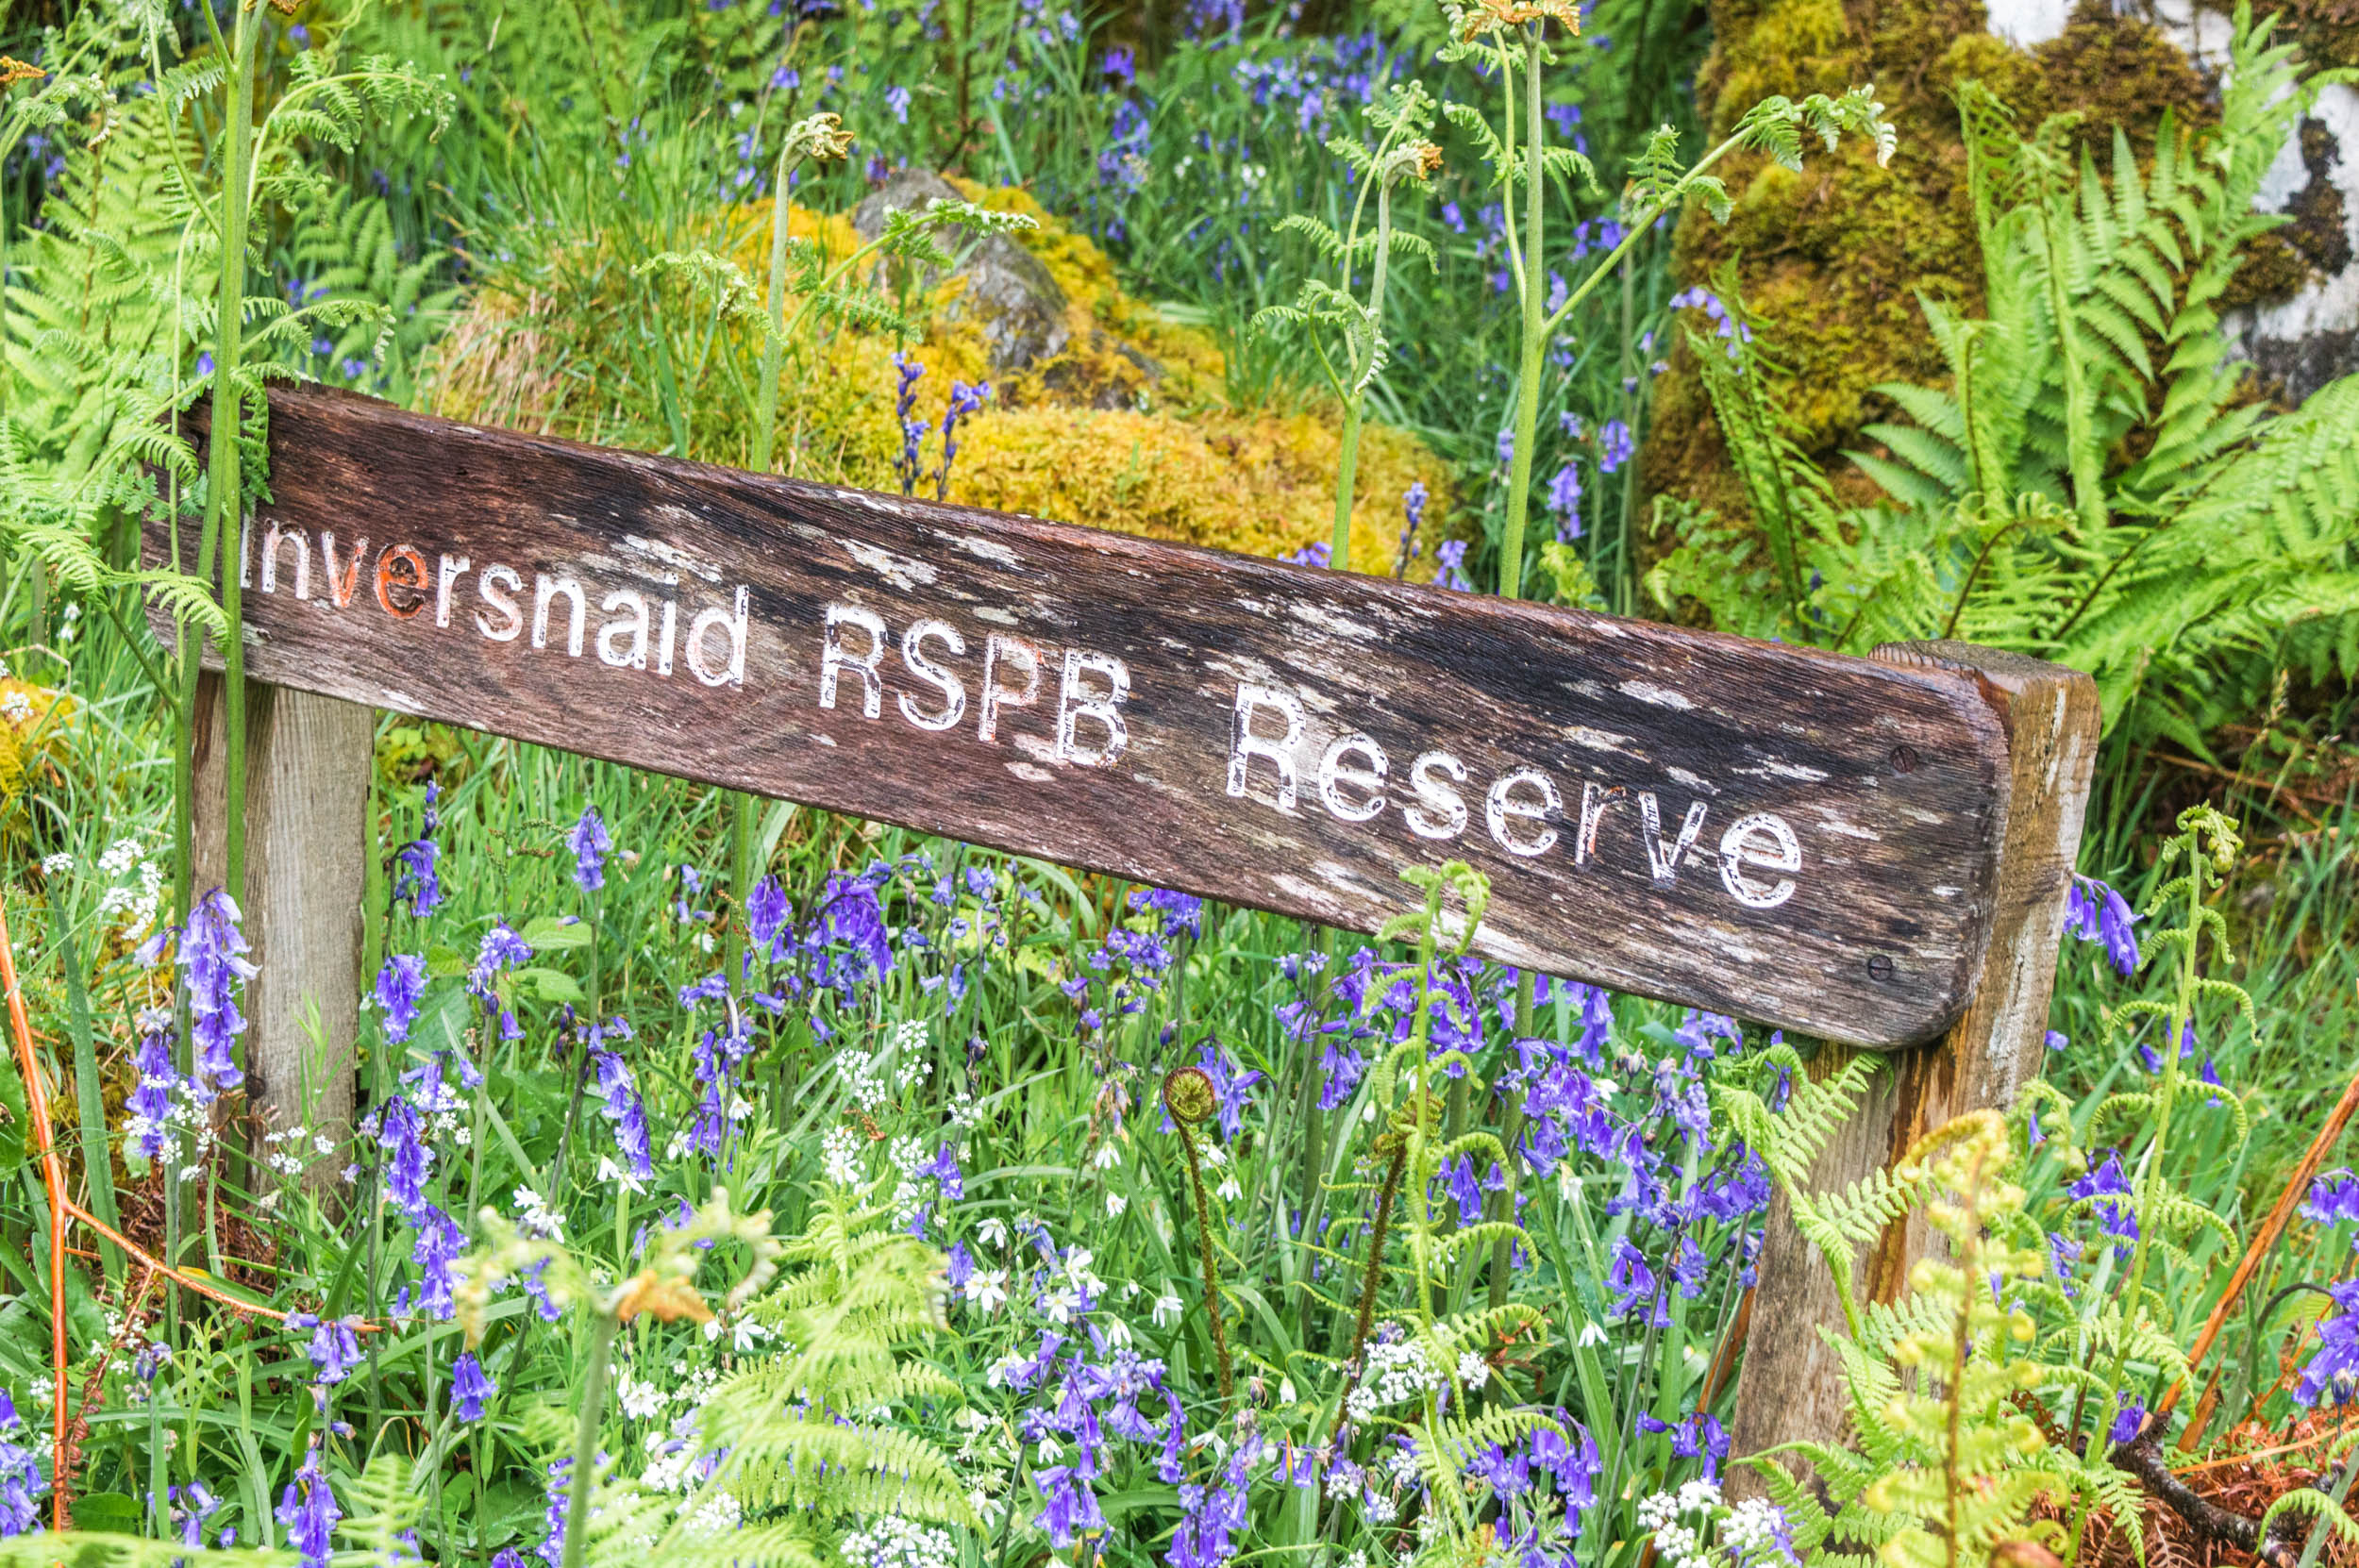 Inversnaid RSPB Reserve